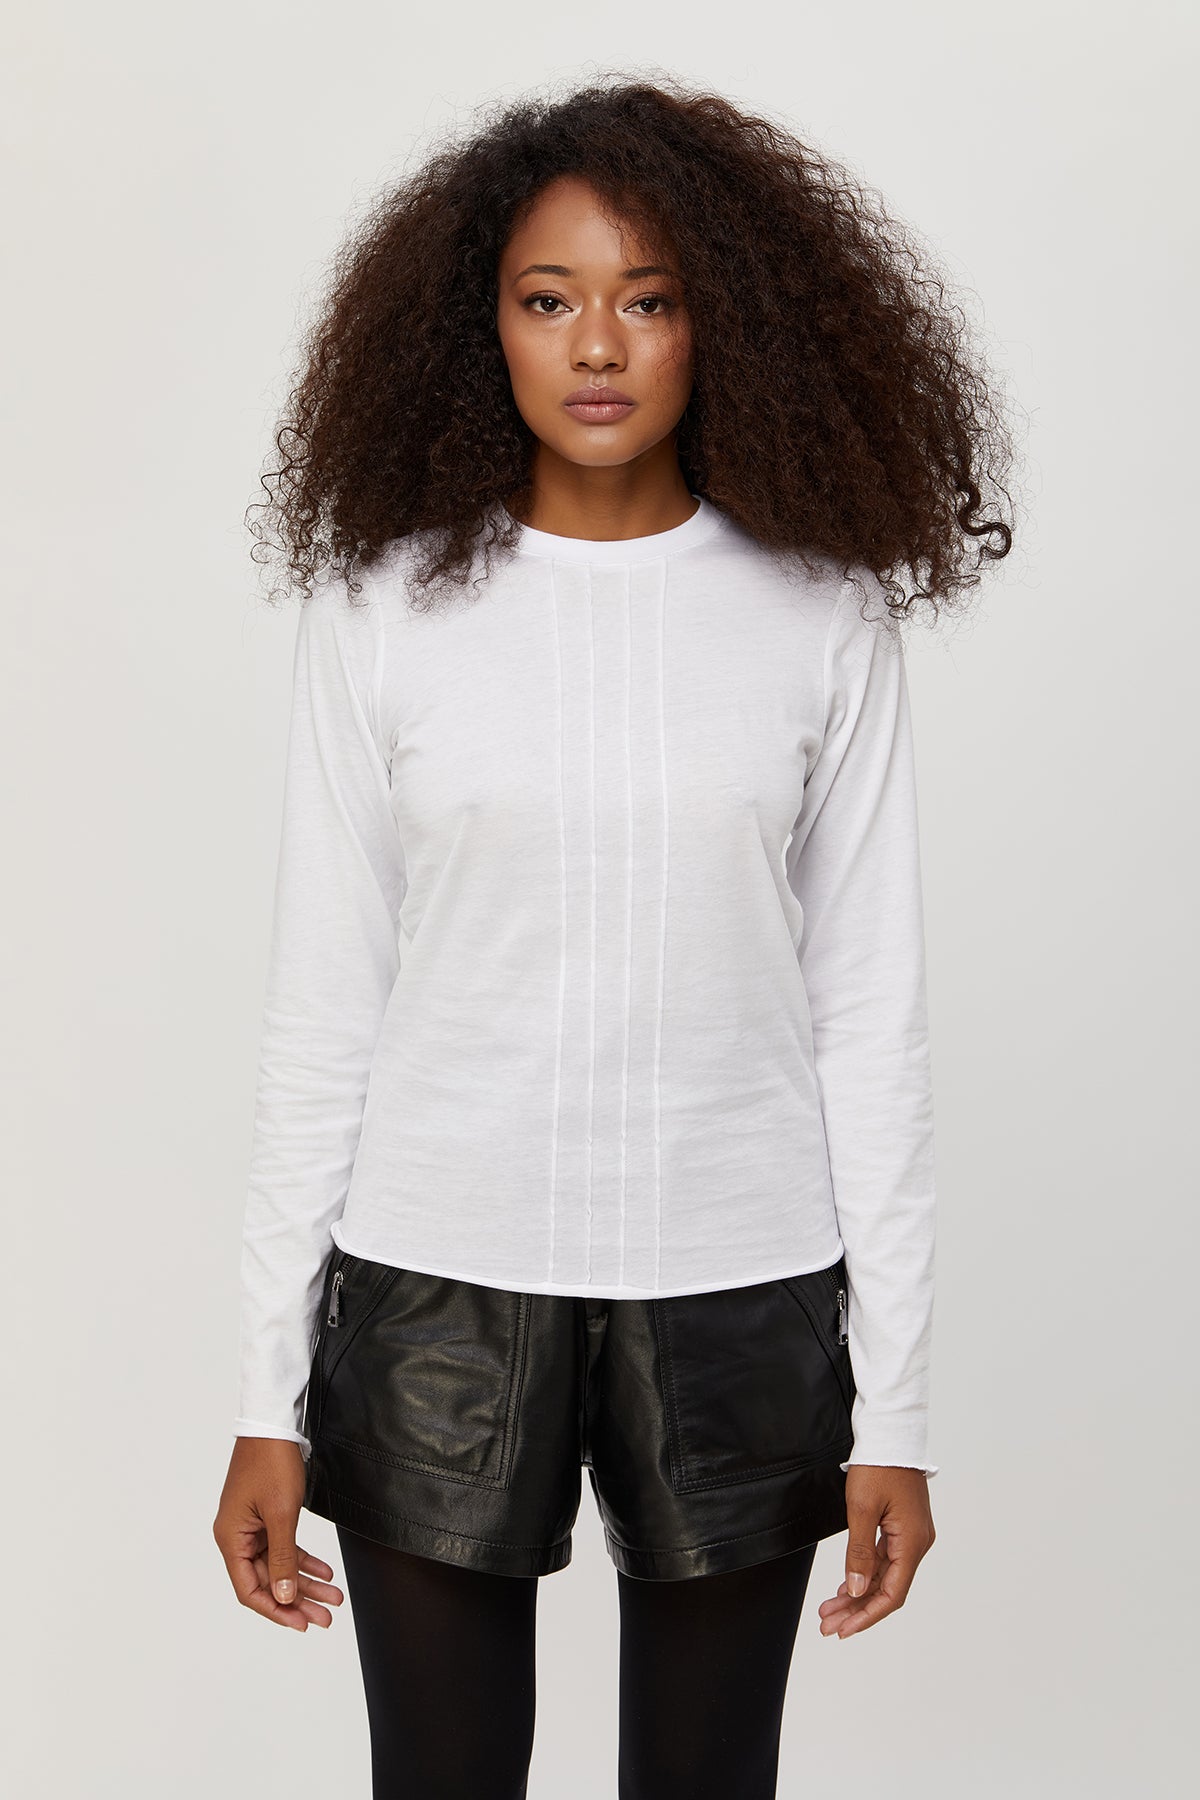 Women's contemporary long sleeve t-shirts. Tops-Tees. 100 % Quality Turkish Pima cotton. Stylish-Luxurious.